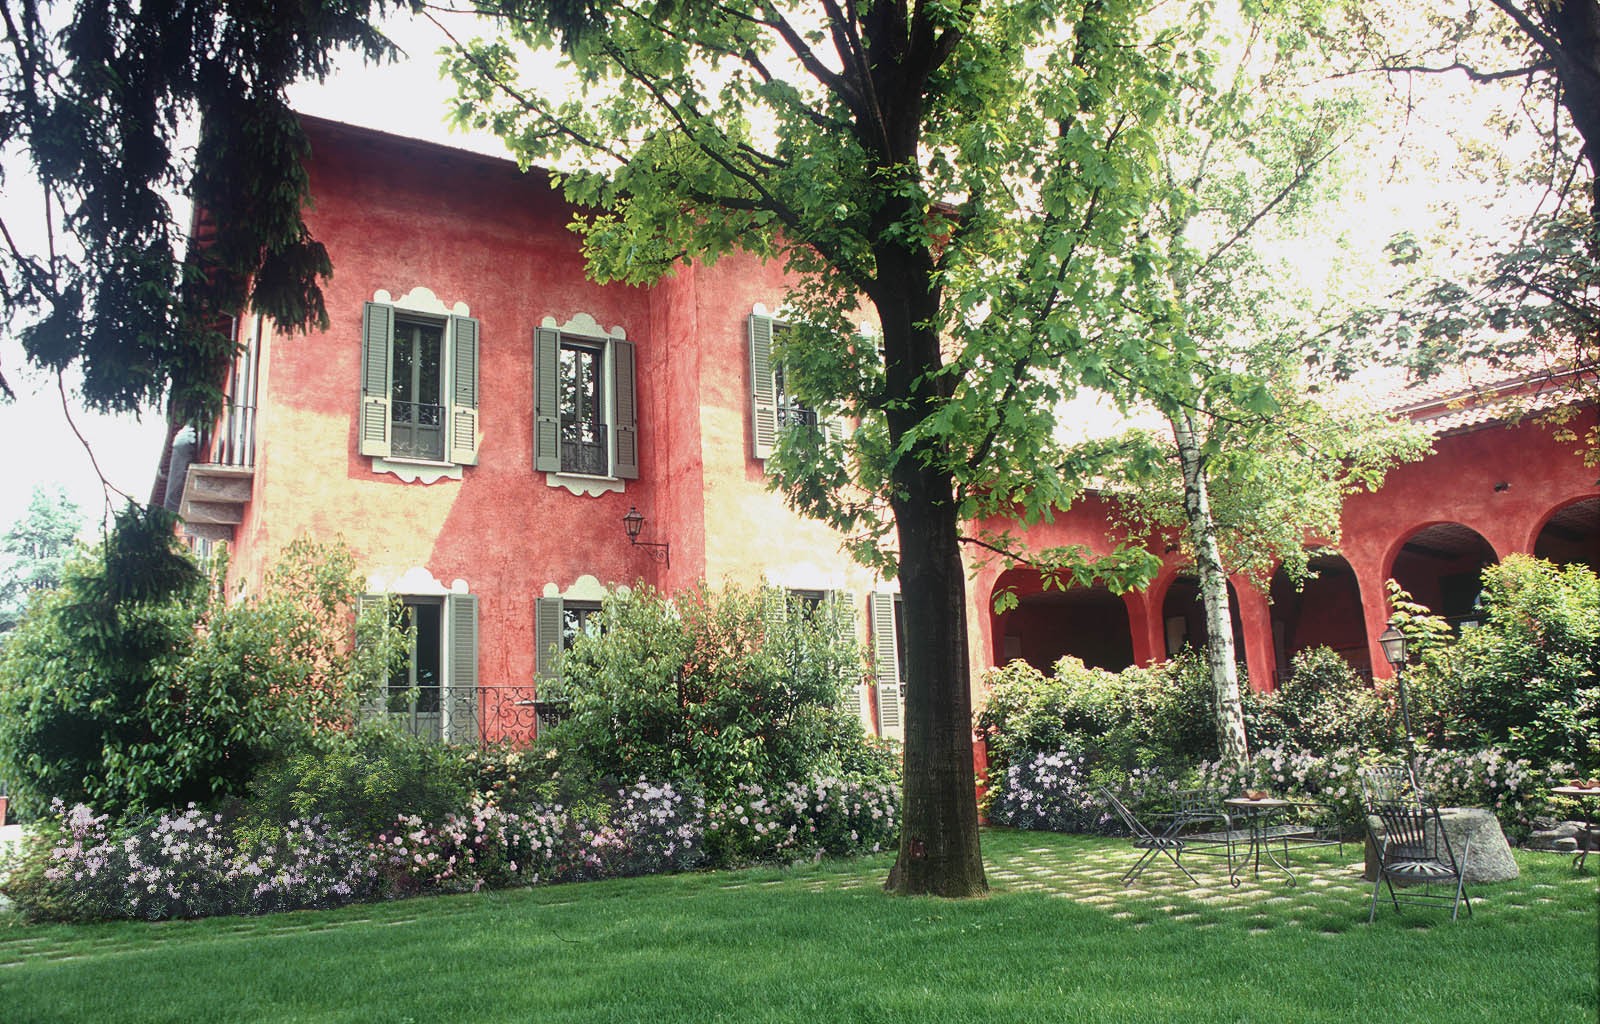 The renovation of a historic villa - Gardens